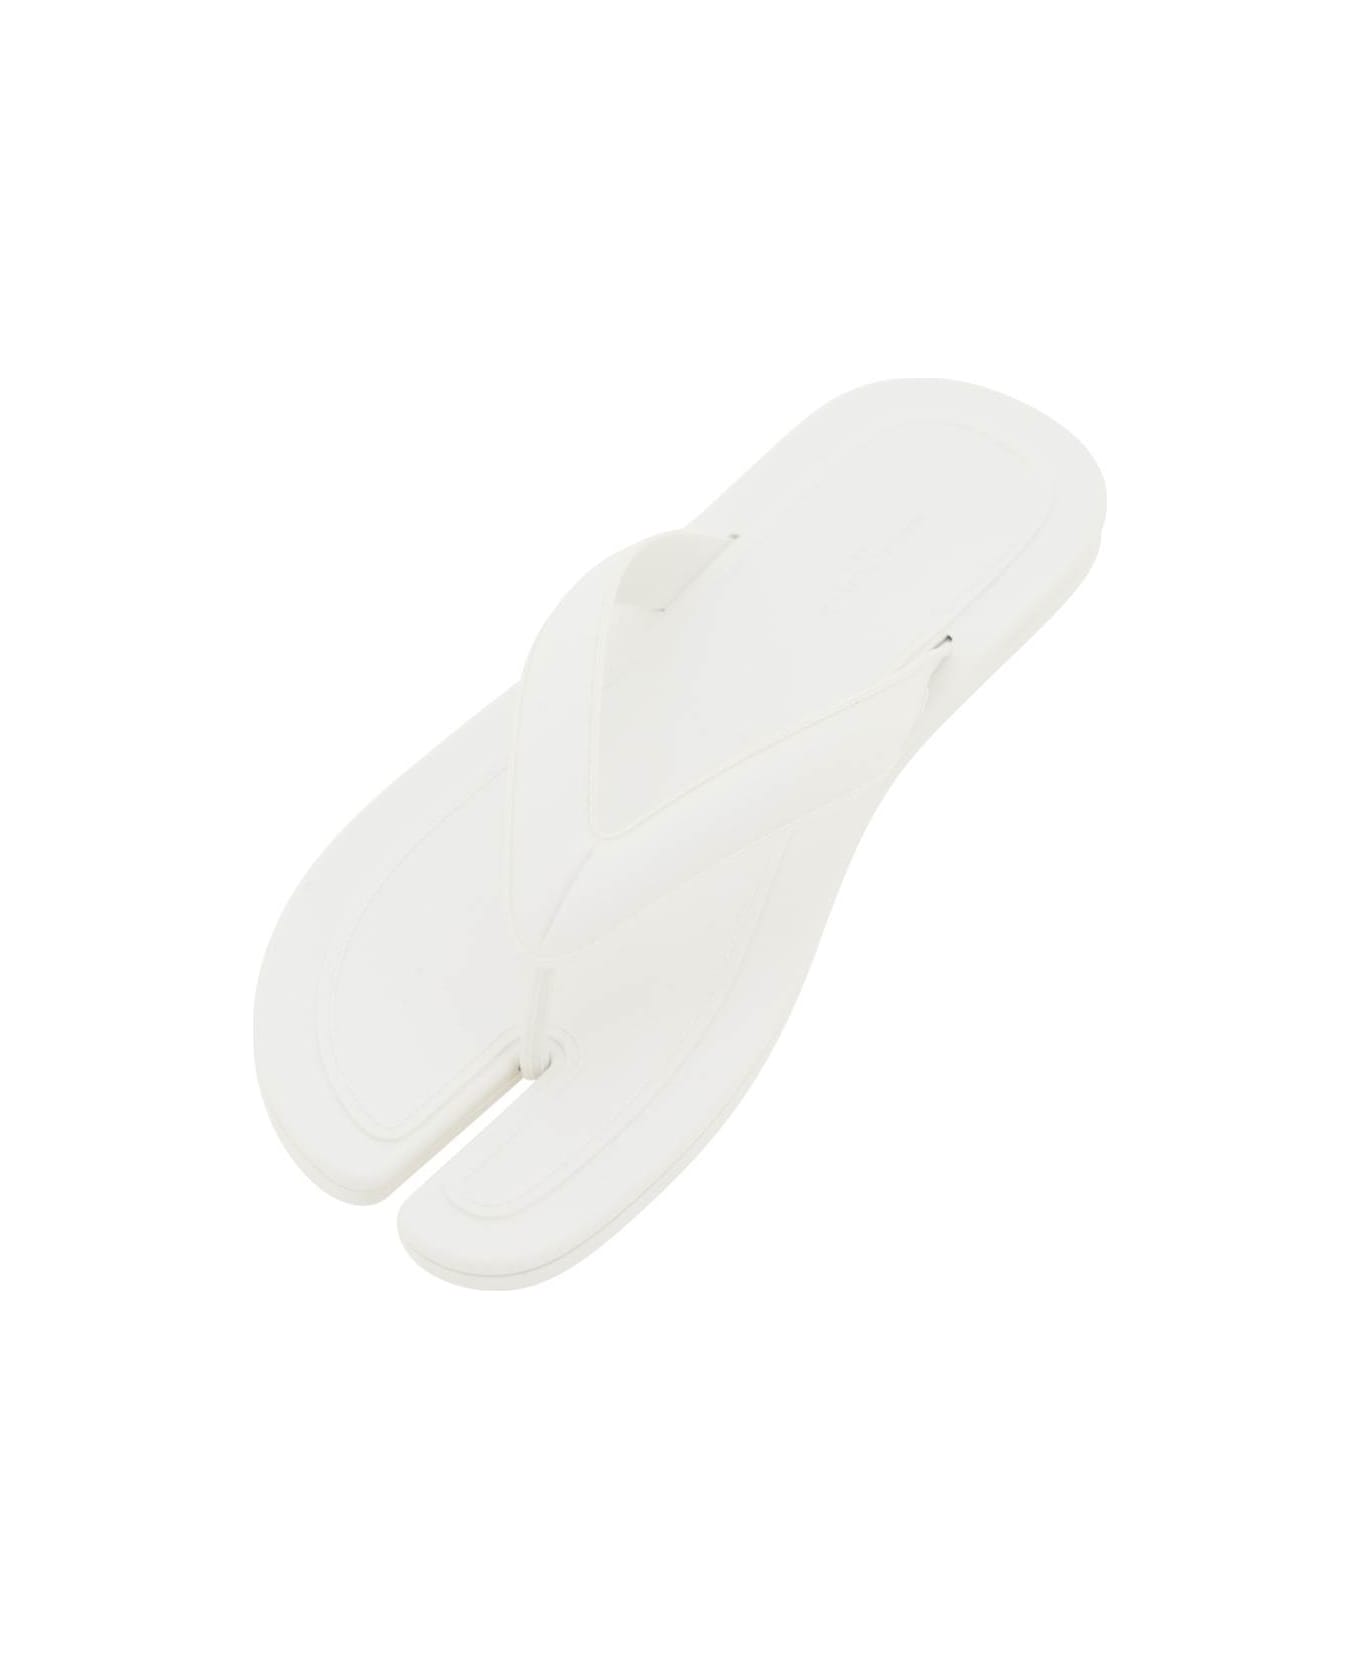 Maison Margiela Tabi Flip Flop Sandals - White その他各種シューズ